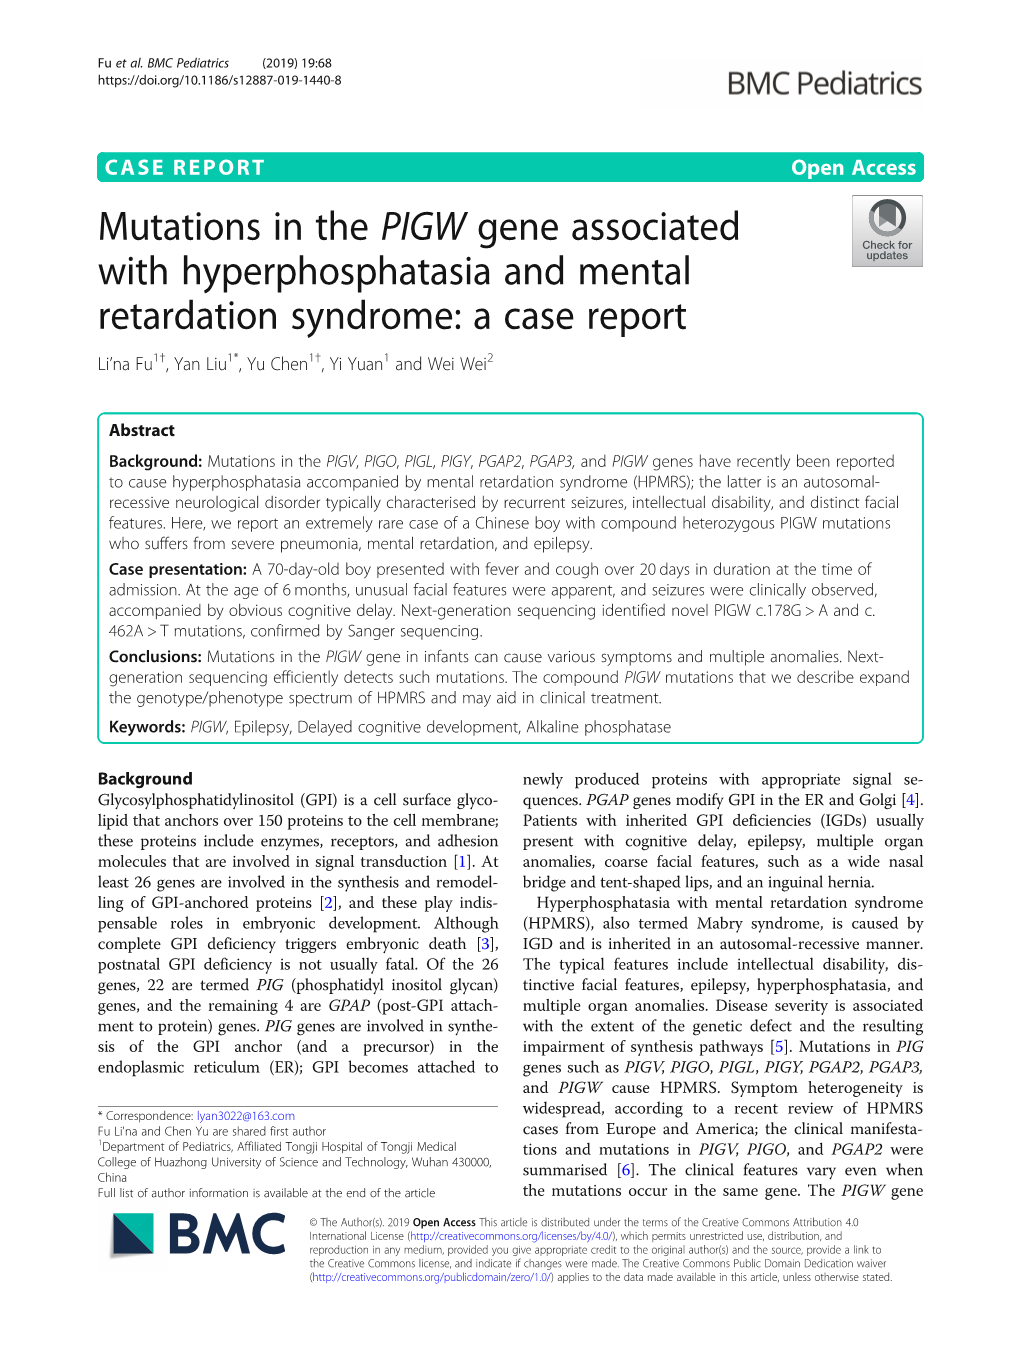 Mutations in the PIGW Gene Associated with Hyperphosphatasia and Mental Retardation Syndrome: a Case Report Li’Na Fu1†, Yan Liu1*, Yu Chen1†, Yi Yuan1 and Wei Wei2